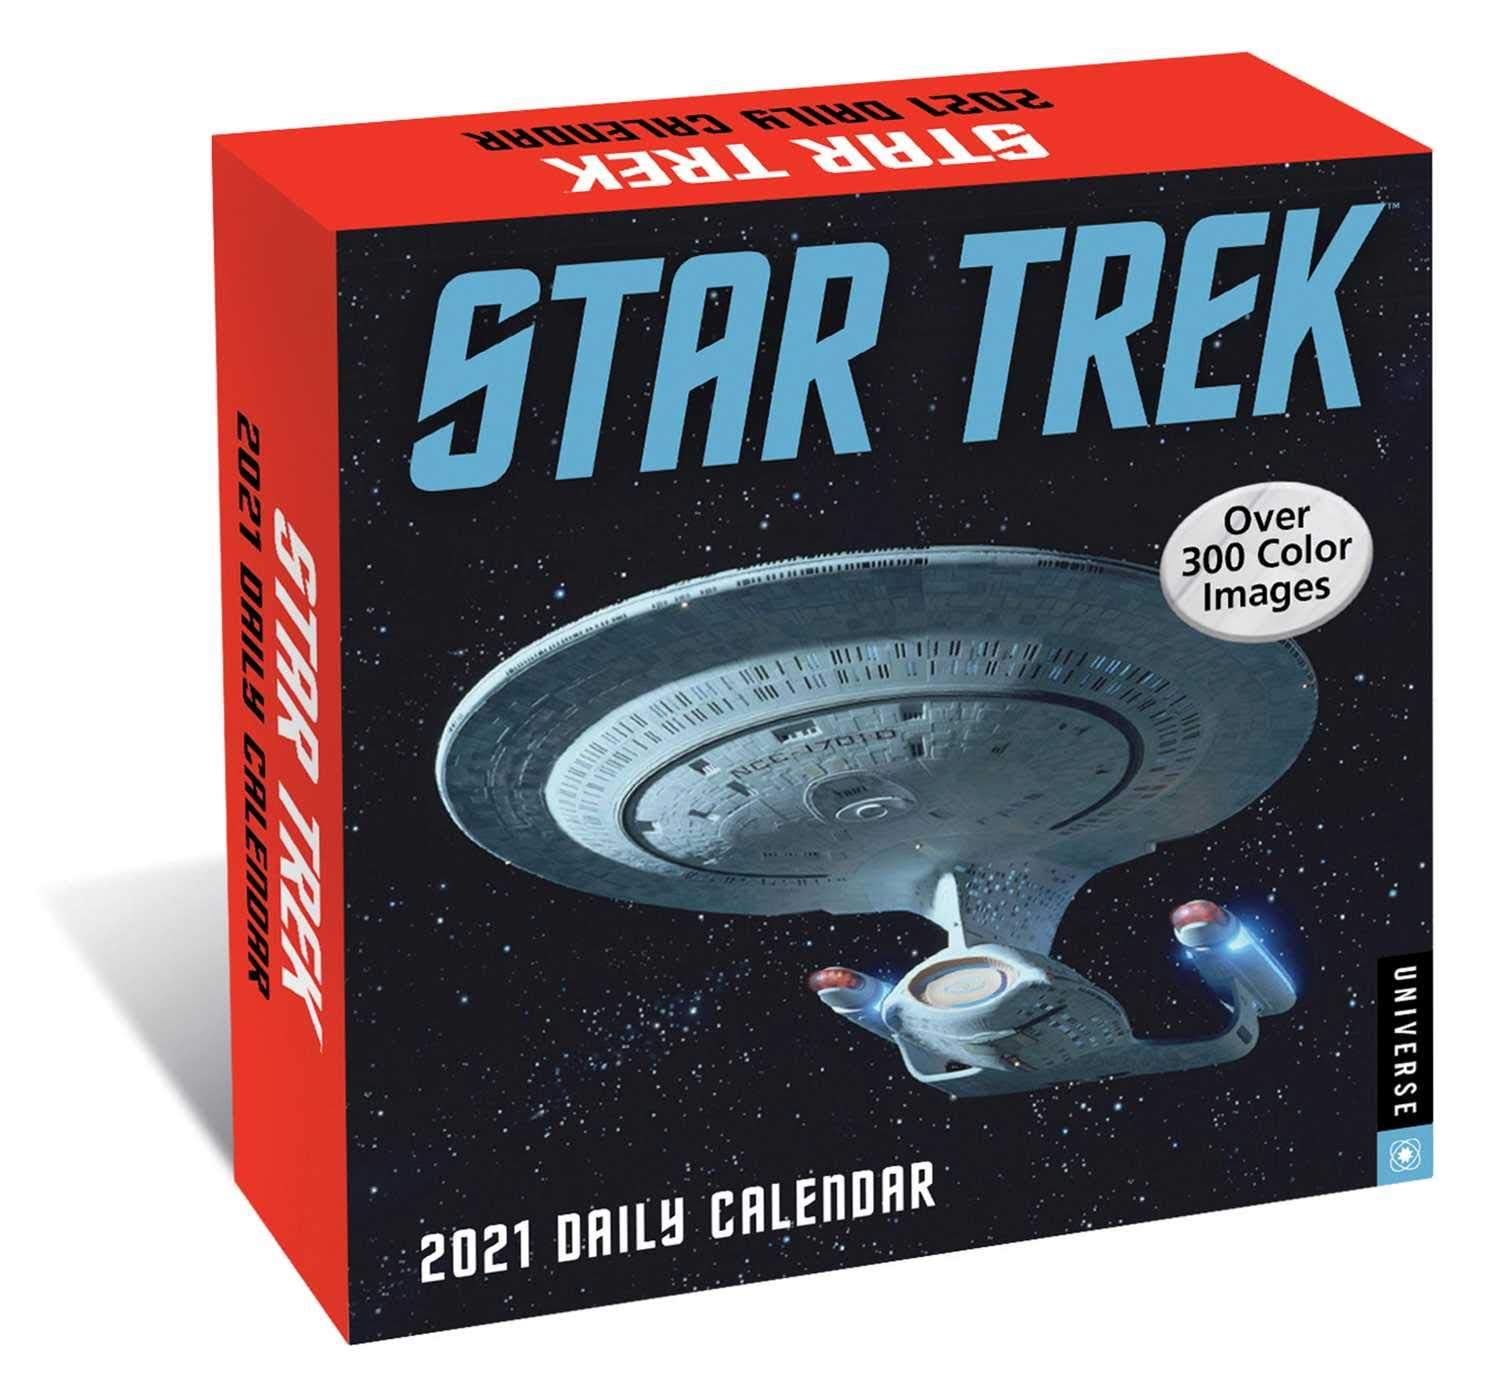 The Trek Collective 2021 Star Trek calendar lineup revealed